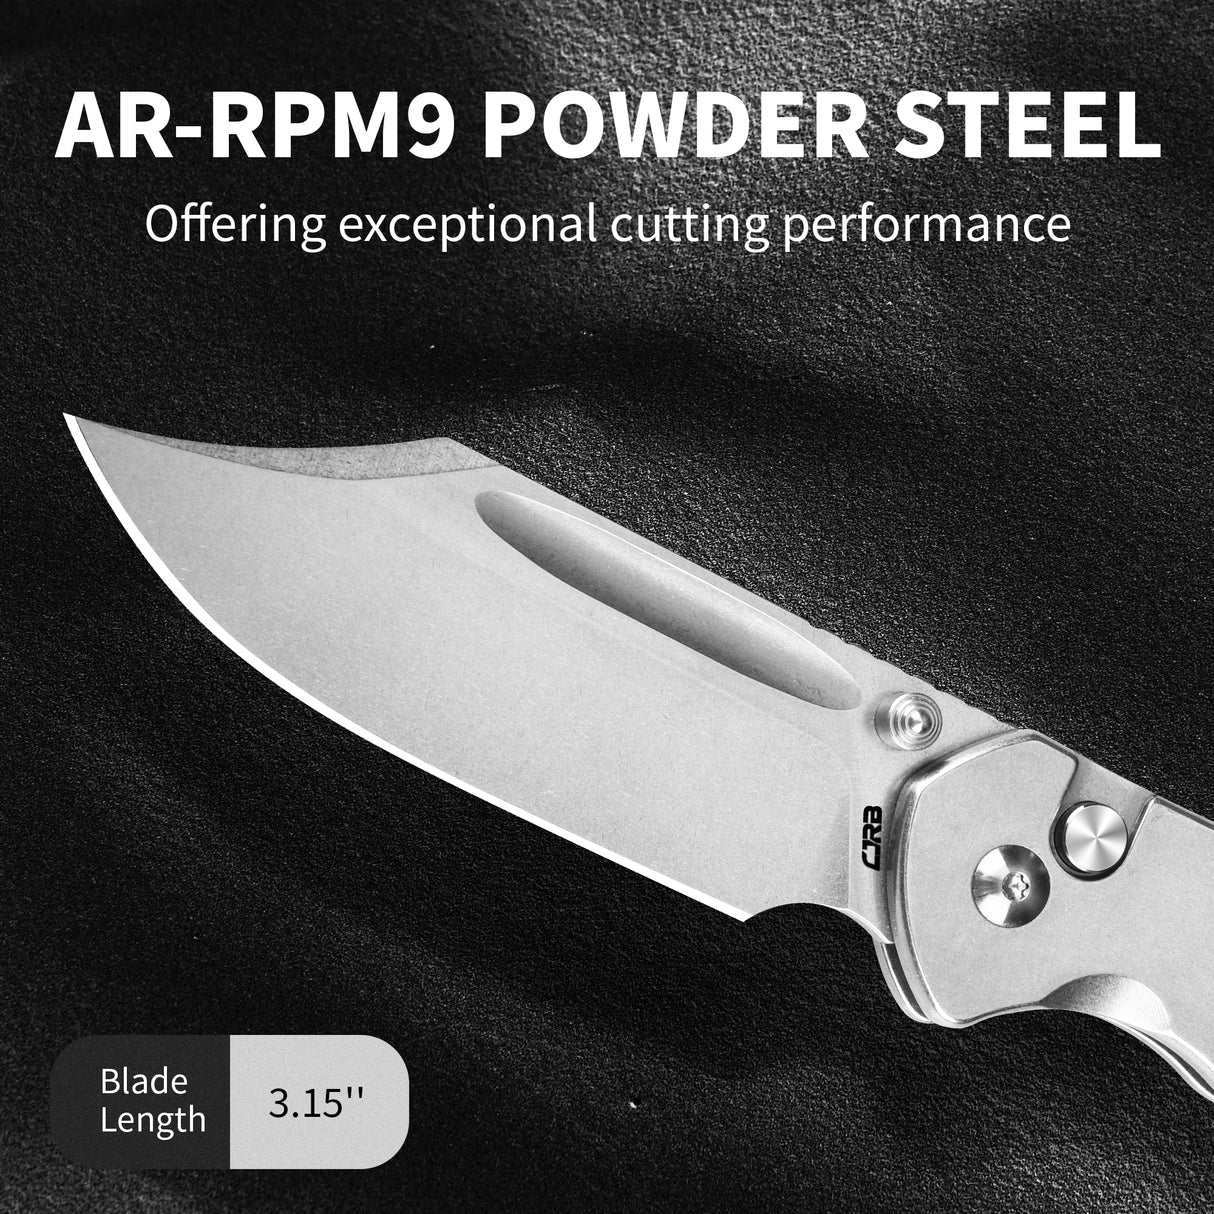 CJRB Bowie Pyrite J1942 AR-RPM9 Powder Steel Blade Stone Wash Steel Handle Folding Knives